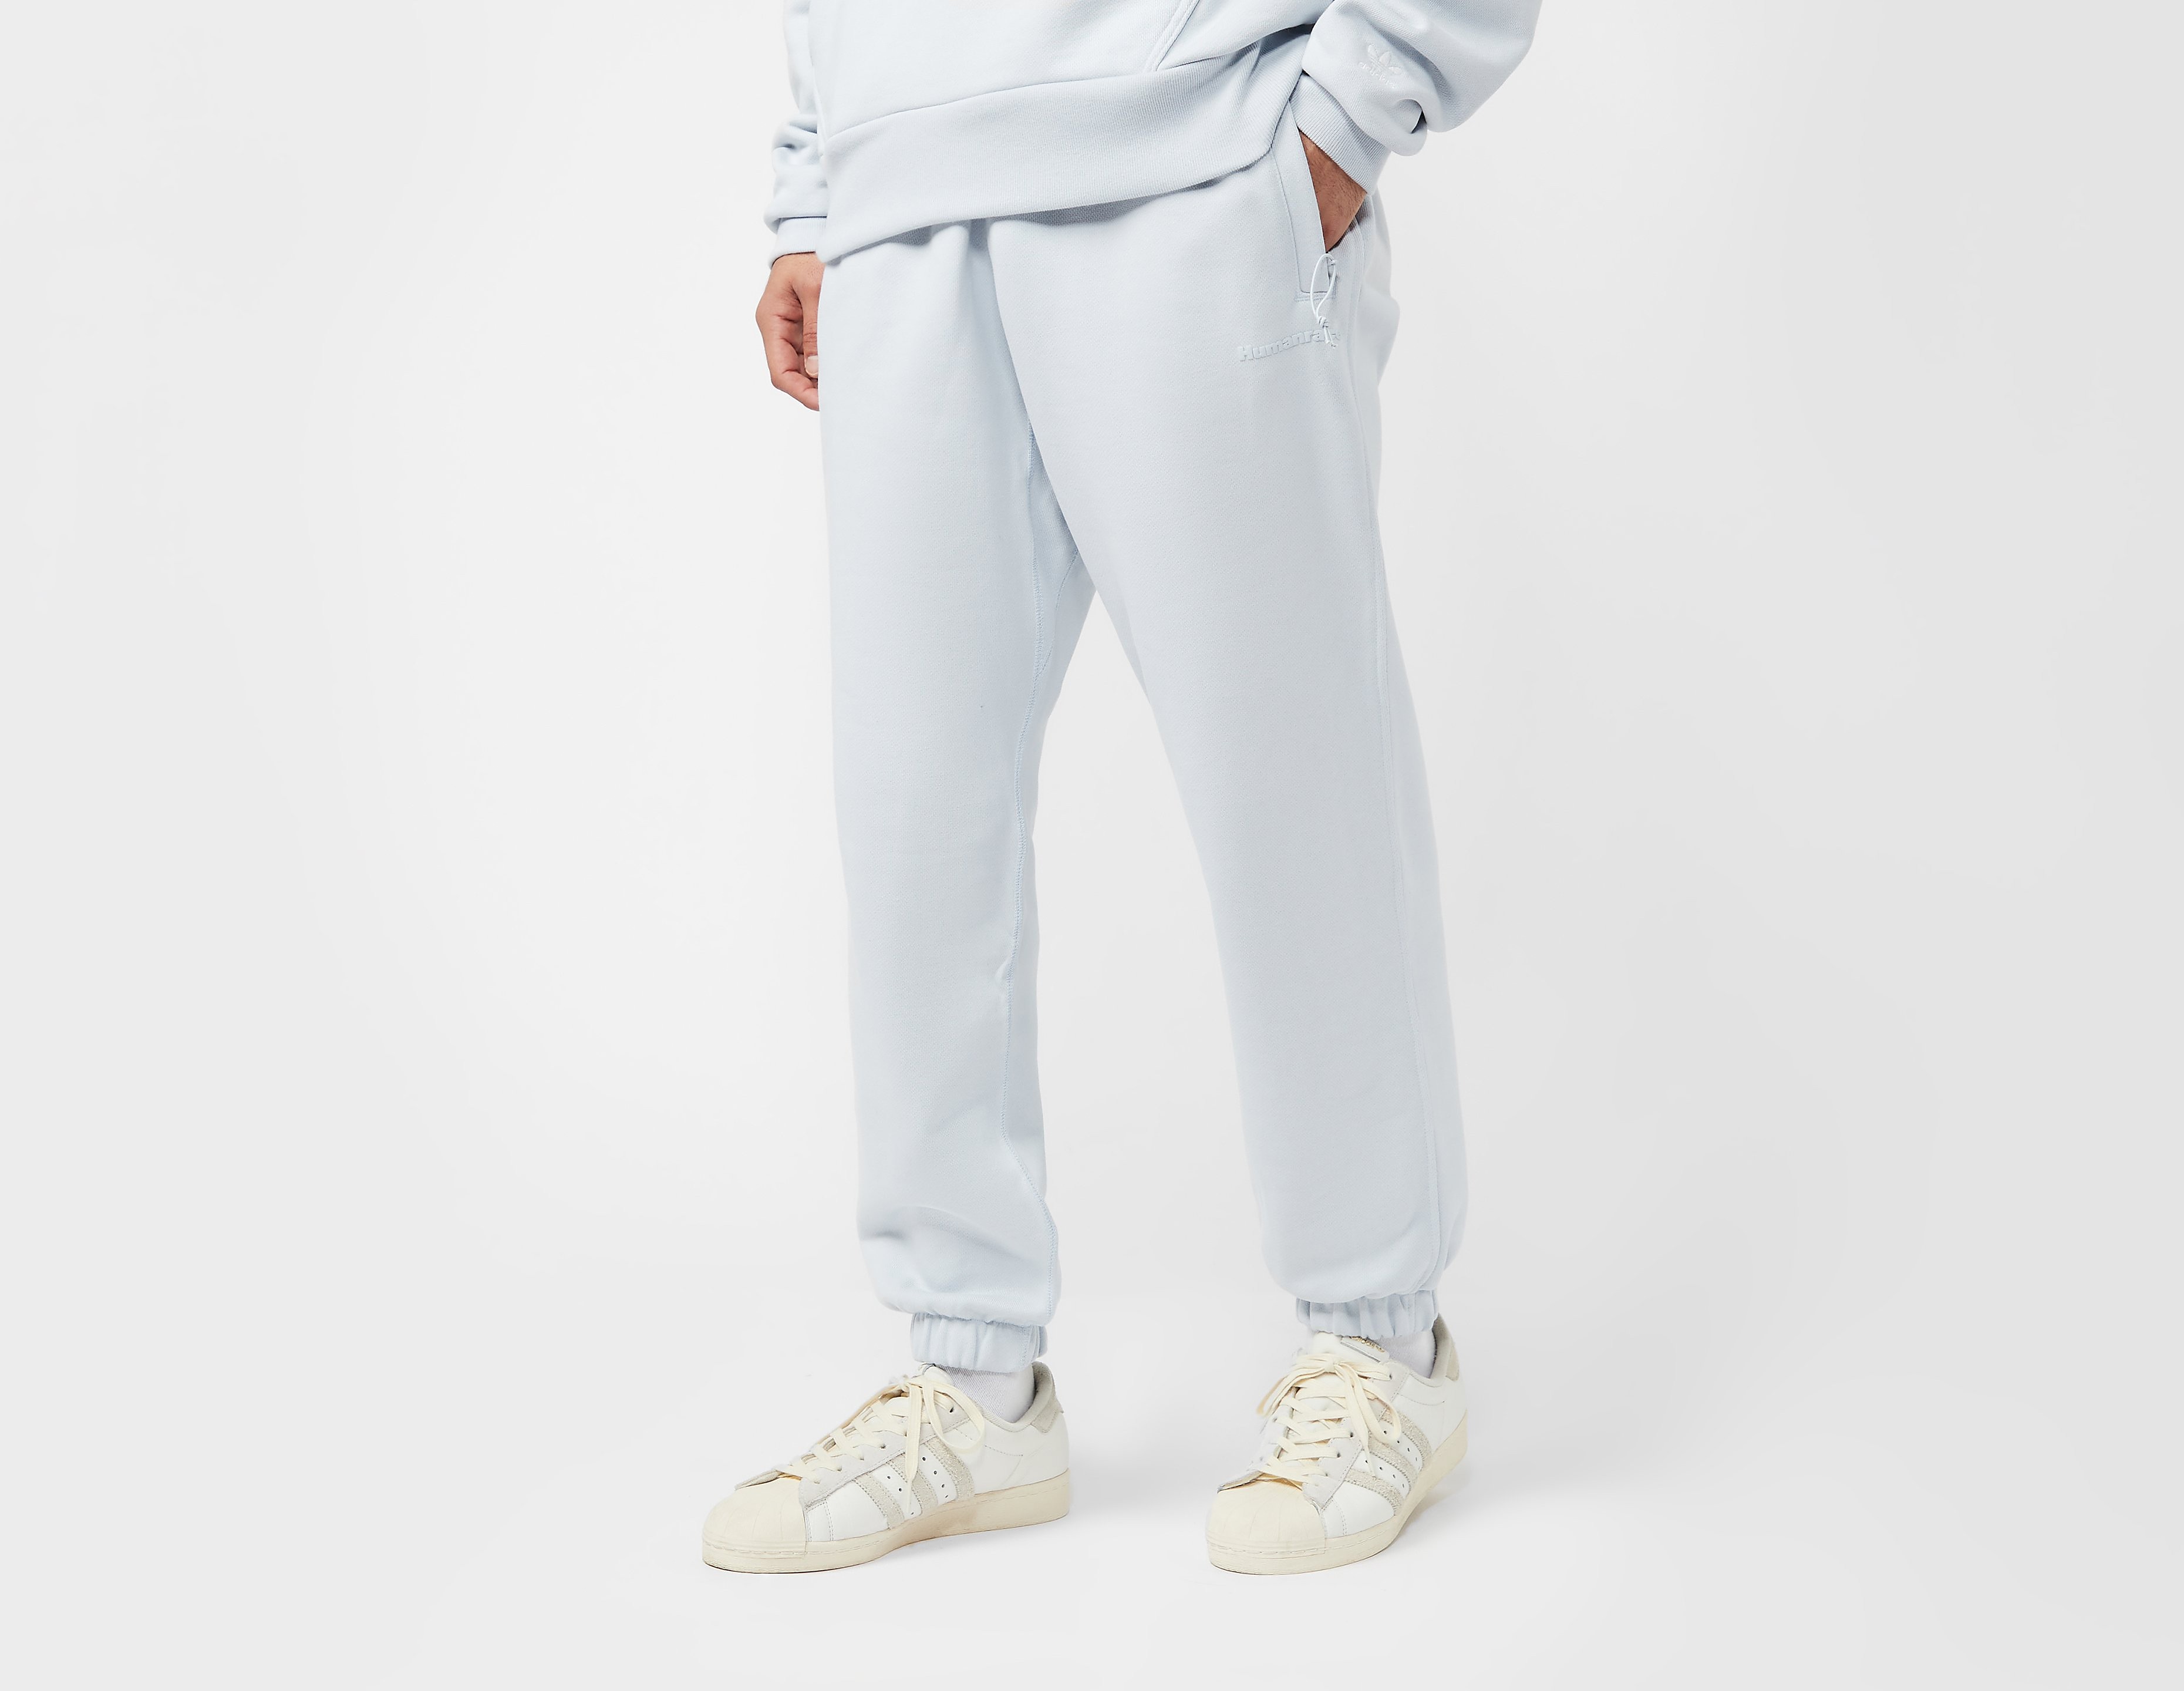 Adidas Originals x Pharrell Williams Basics Sweat Pants